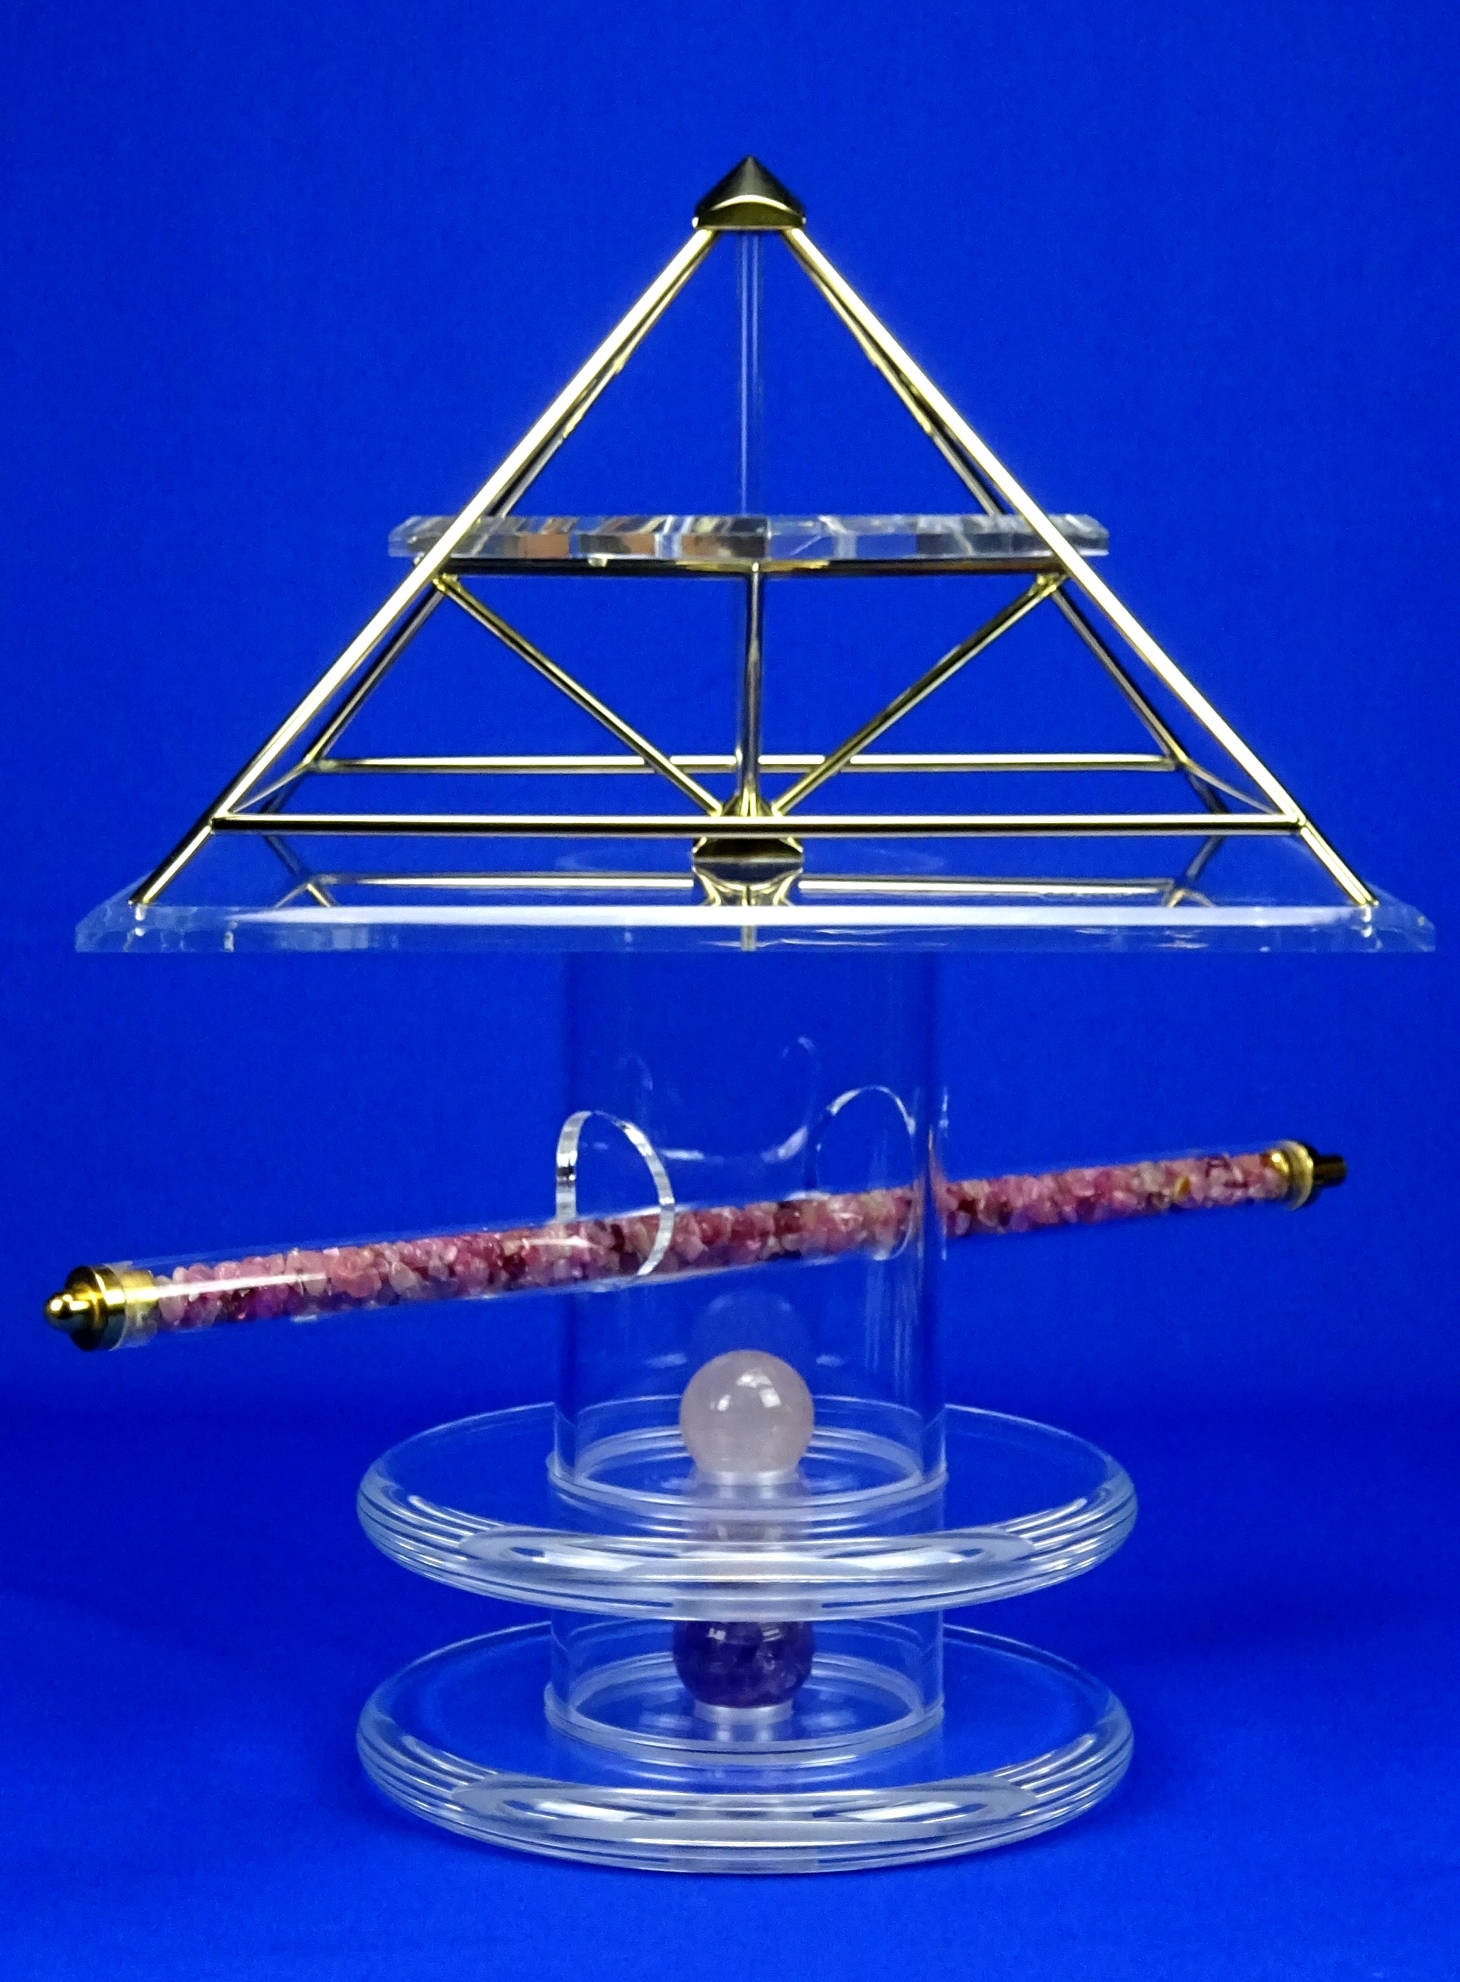 Acrylrohr für Energiepyramide Modell A